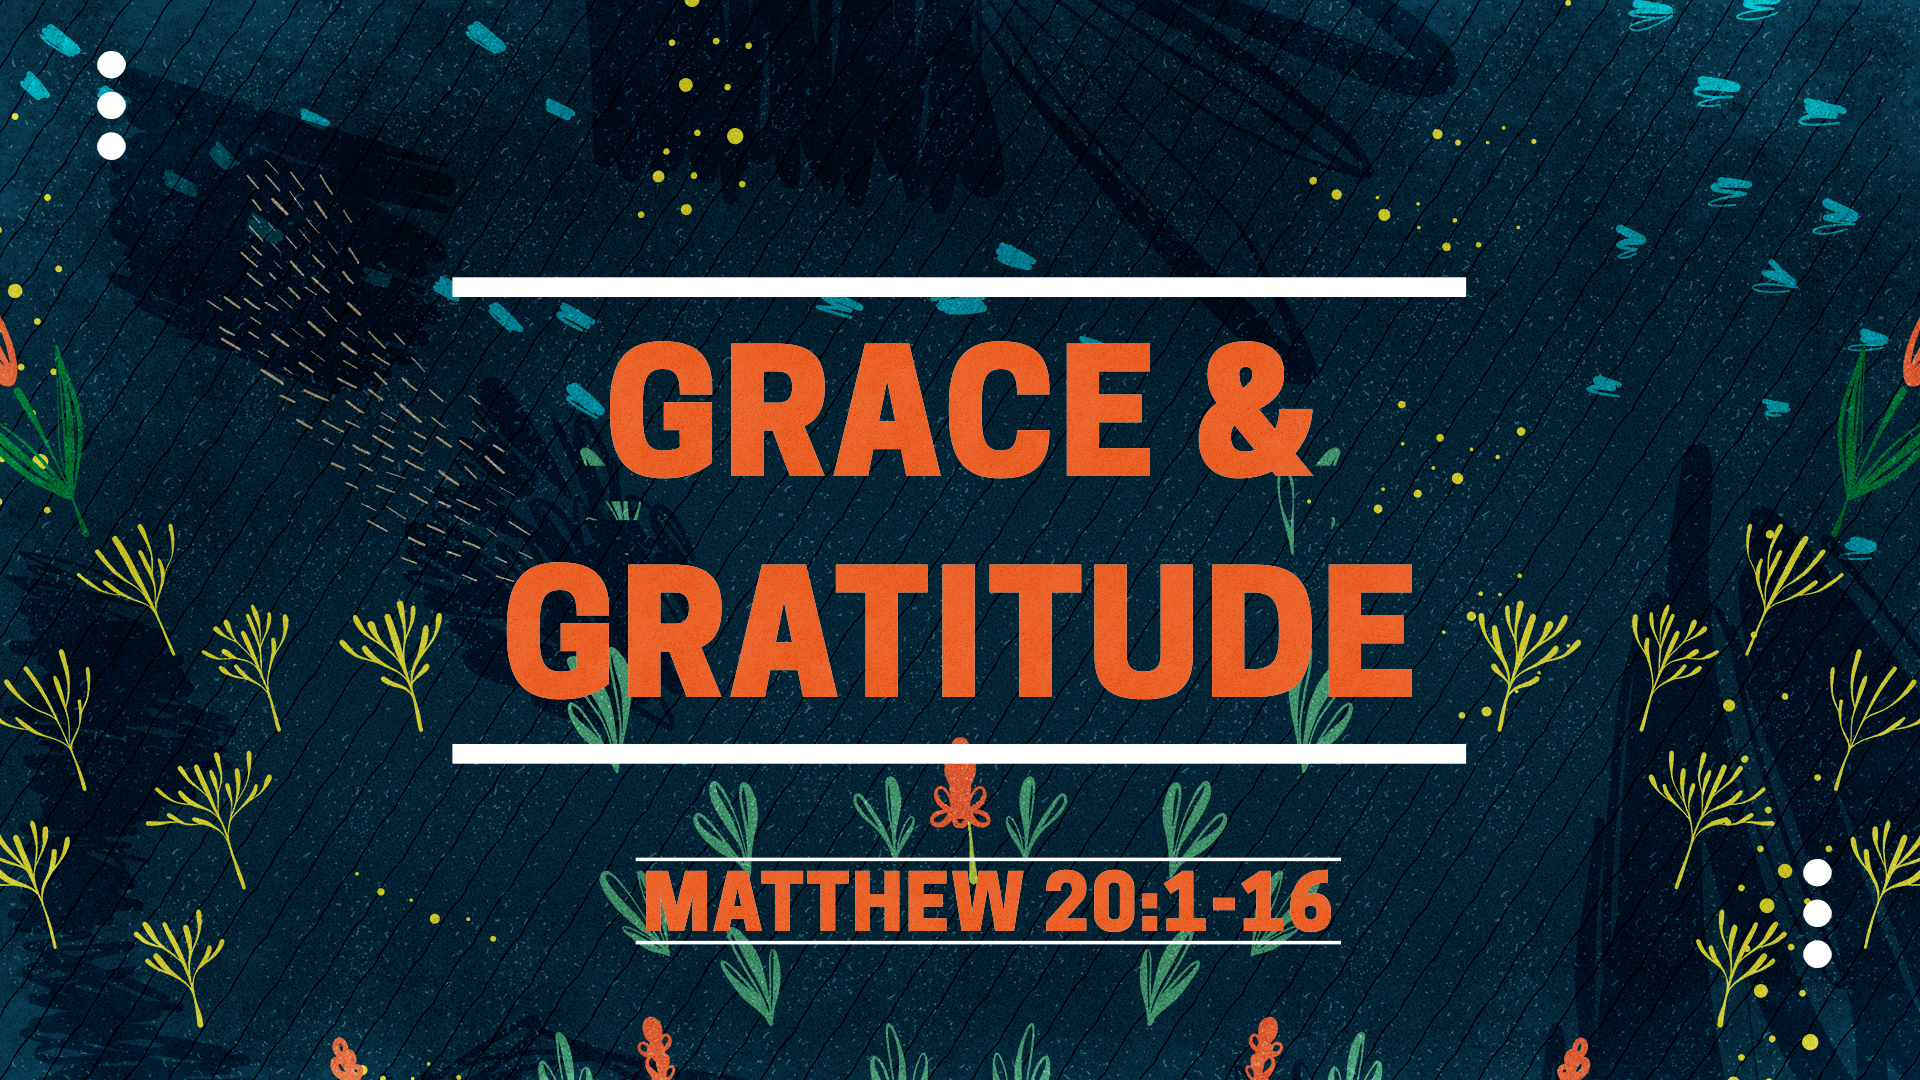 Dec 06, 2020 - Grace & Gratitude (Video) - Matthew 20: 1-16